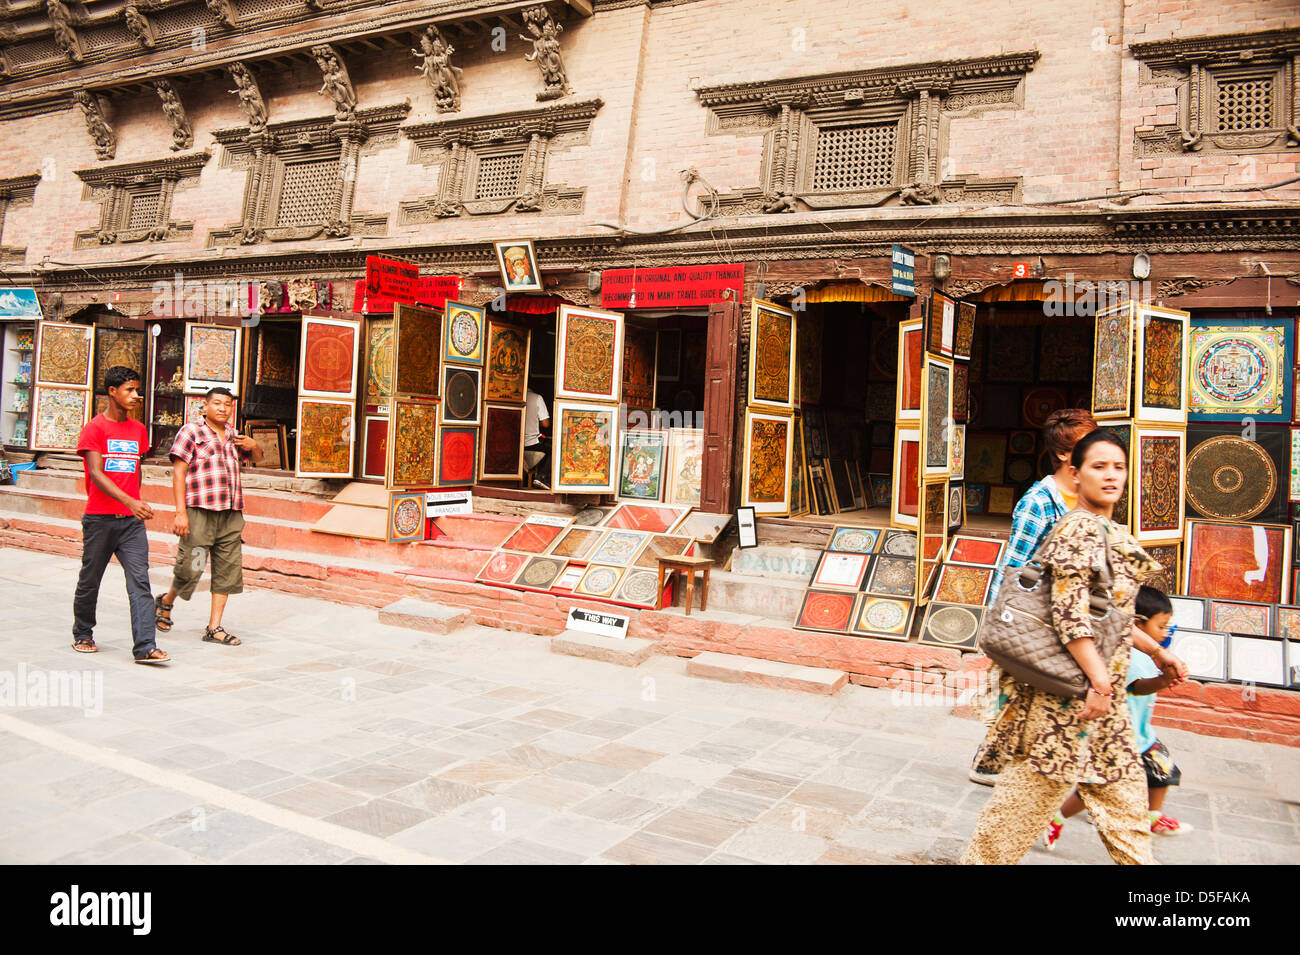 Tourists walking in a street, Hanuman Dhoka, Durbar Square, Kathmandu, Nepal Stock Photo